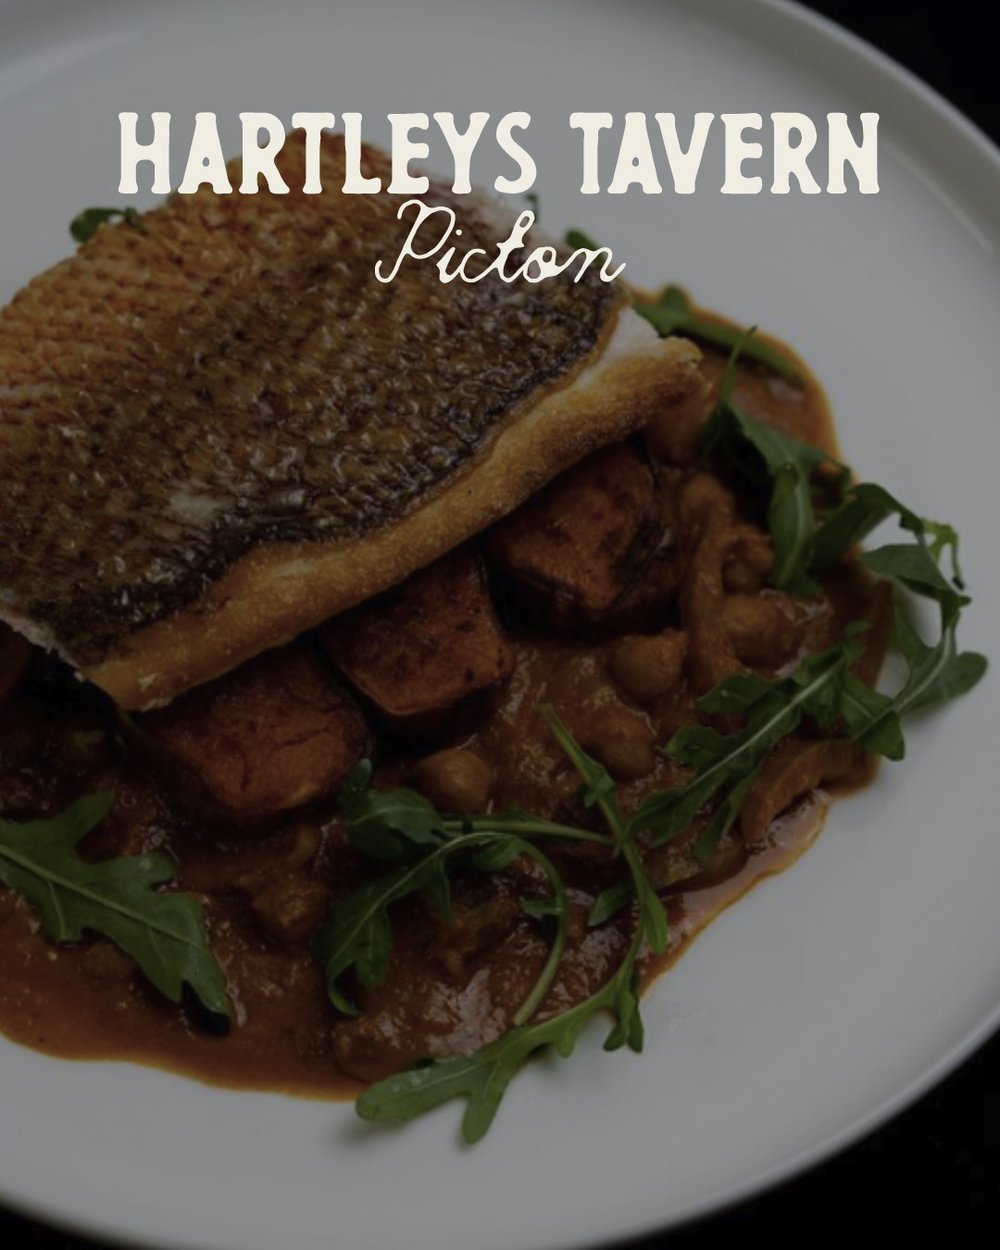 Hartleys Tavern, Picton